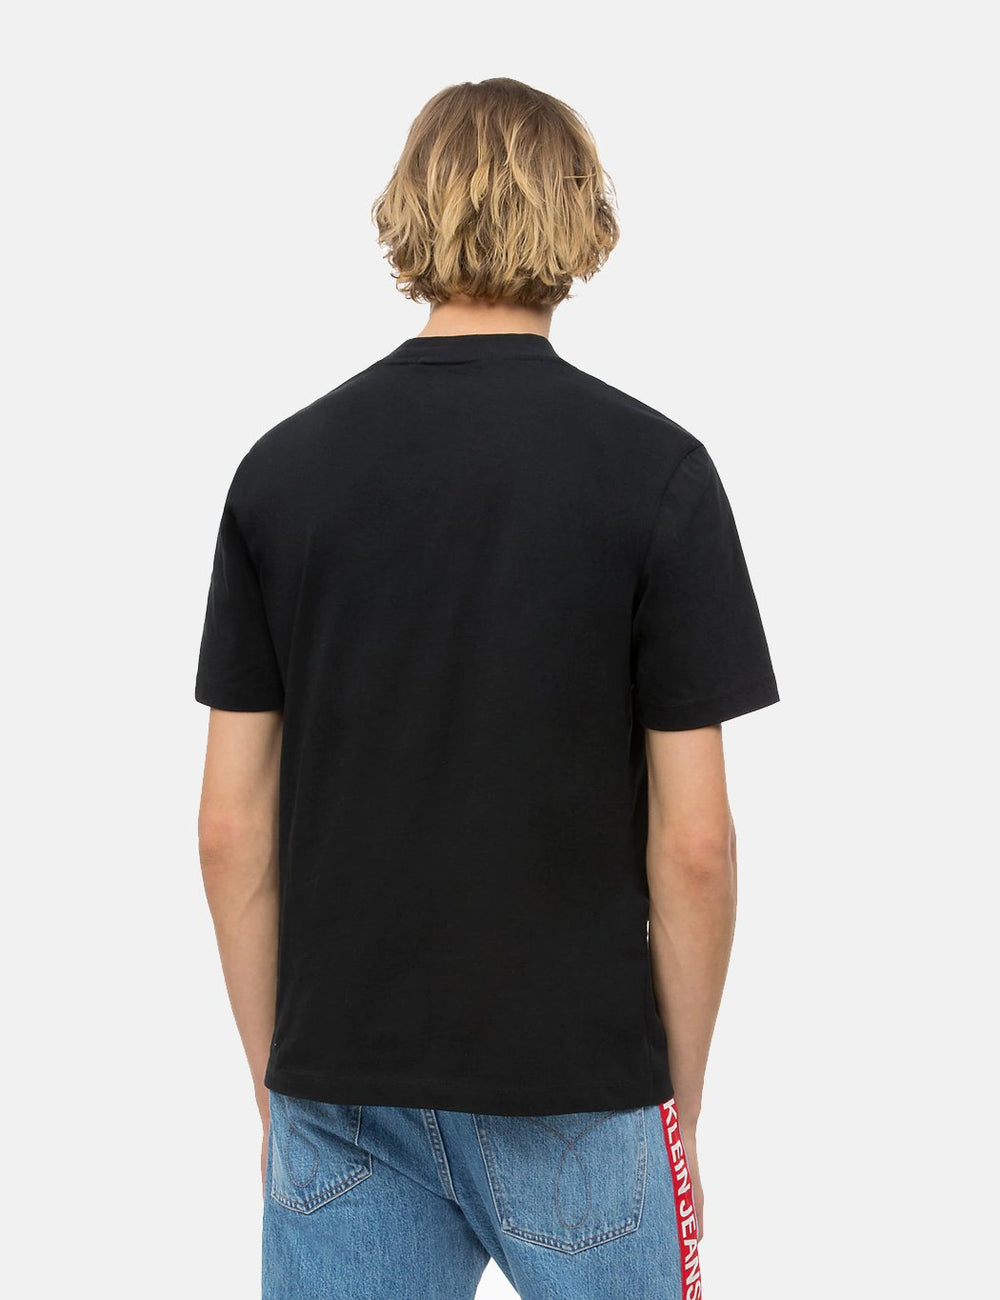 Crew Klein Embroidered Black – USA URBAN EXCESS. T-Shirt Calvin - | URBAN Neck EXCESS